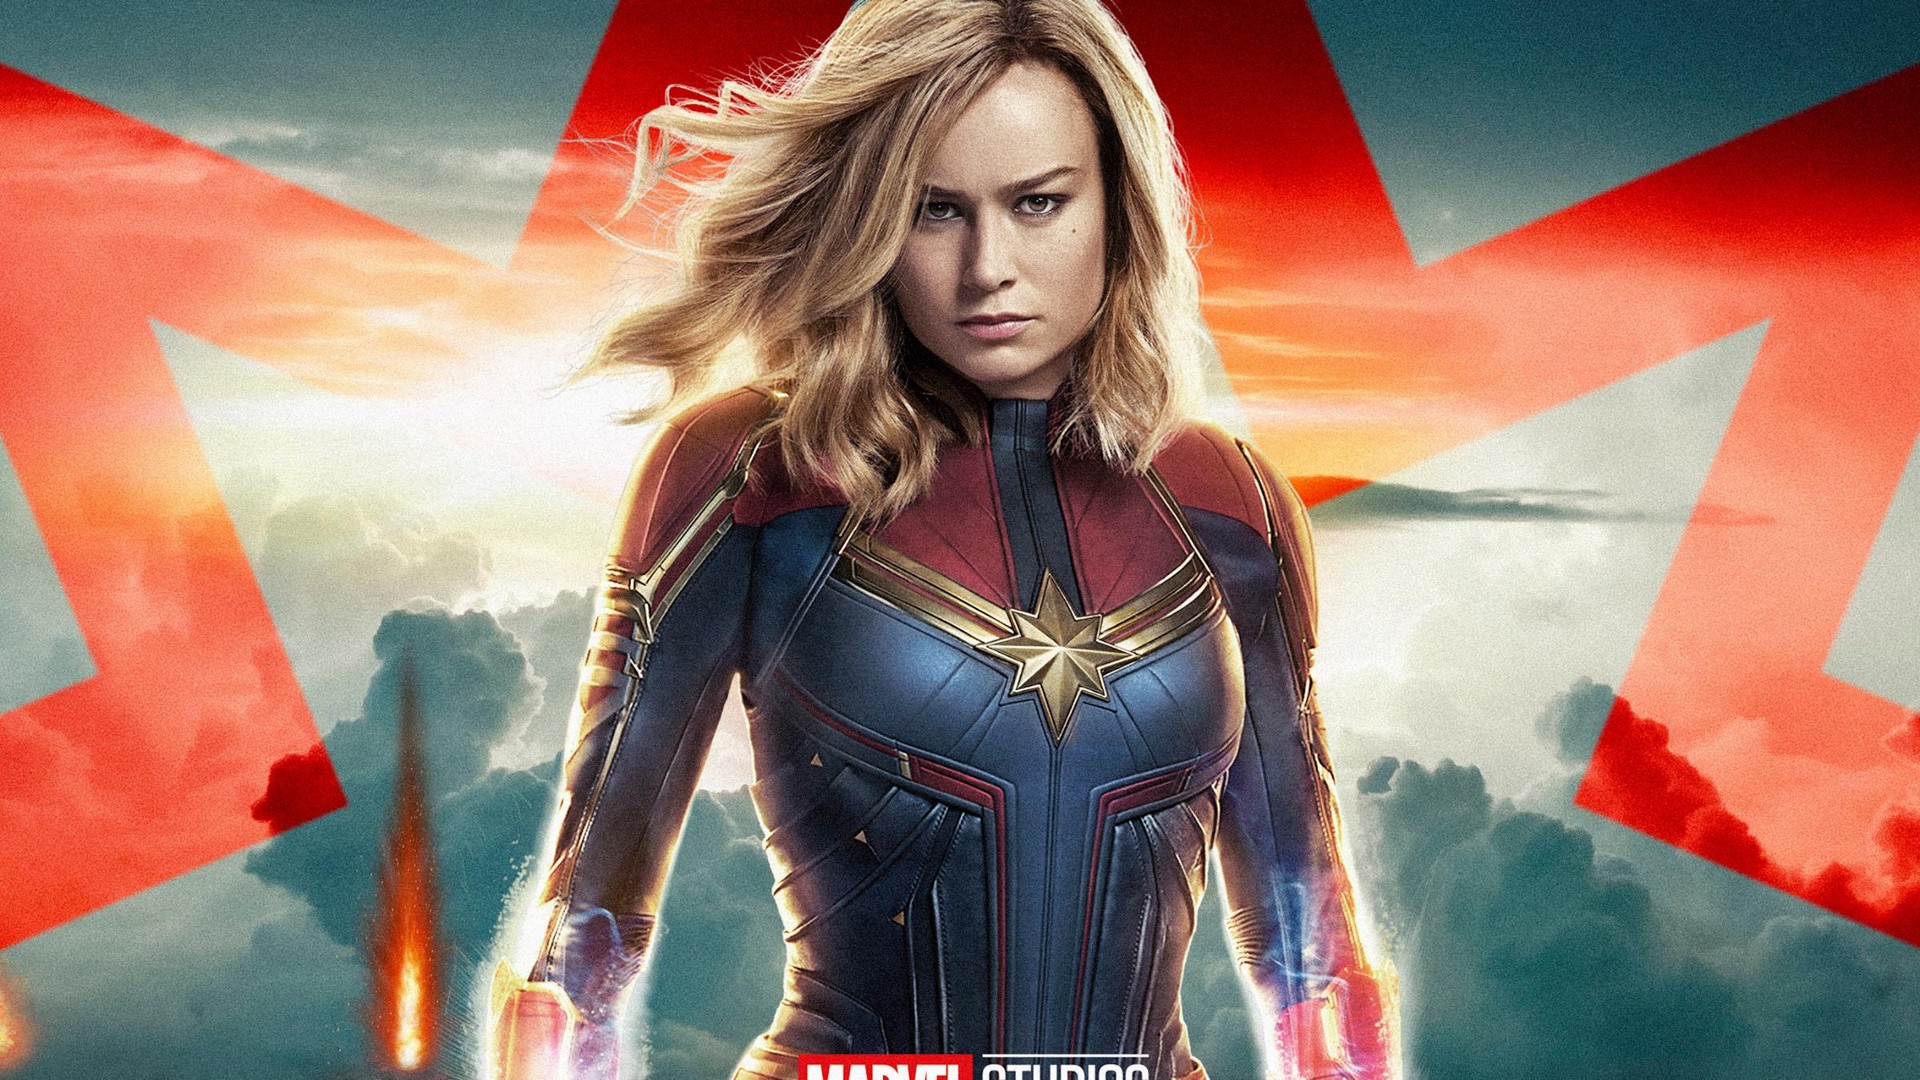 Captain Marvel Wallpaper Movie Poster HD